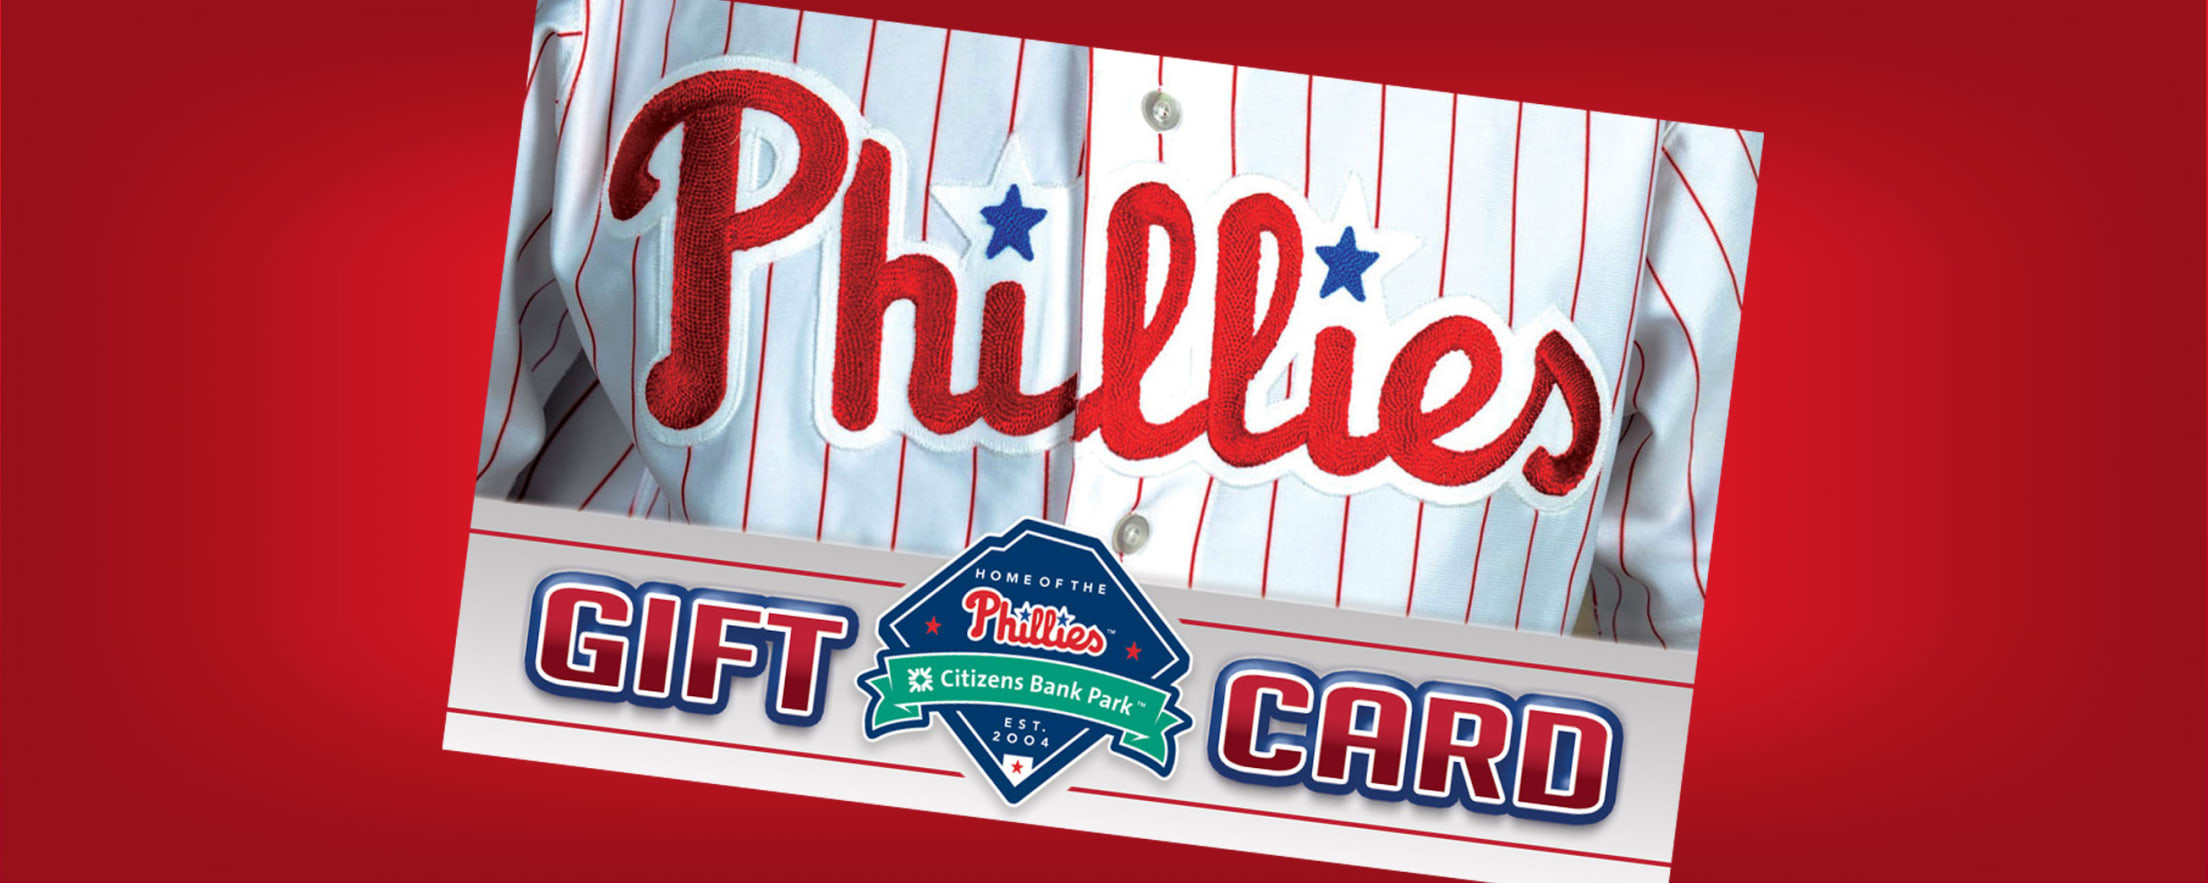 Phillies Ticket Information Philadelphia Phillies